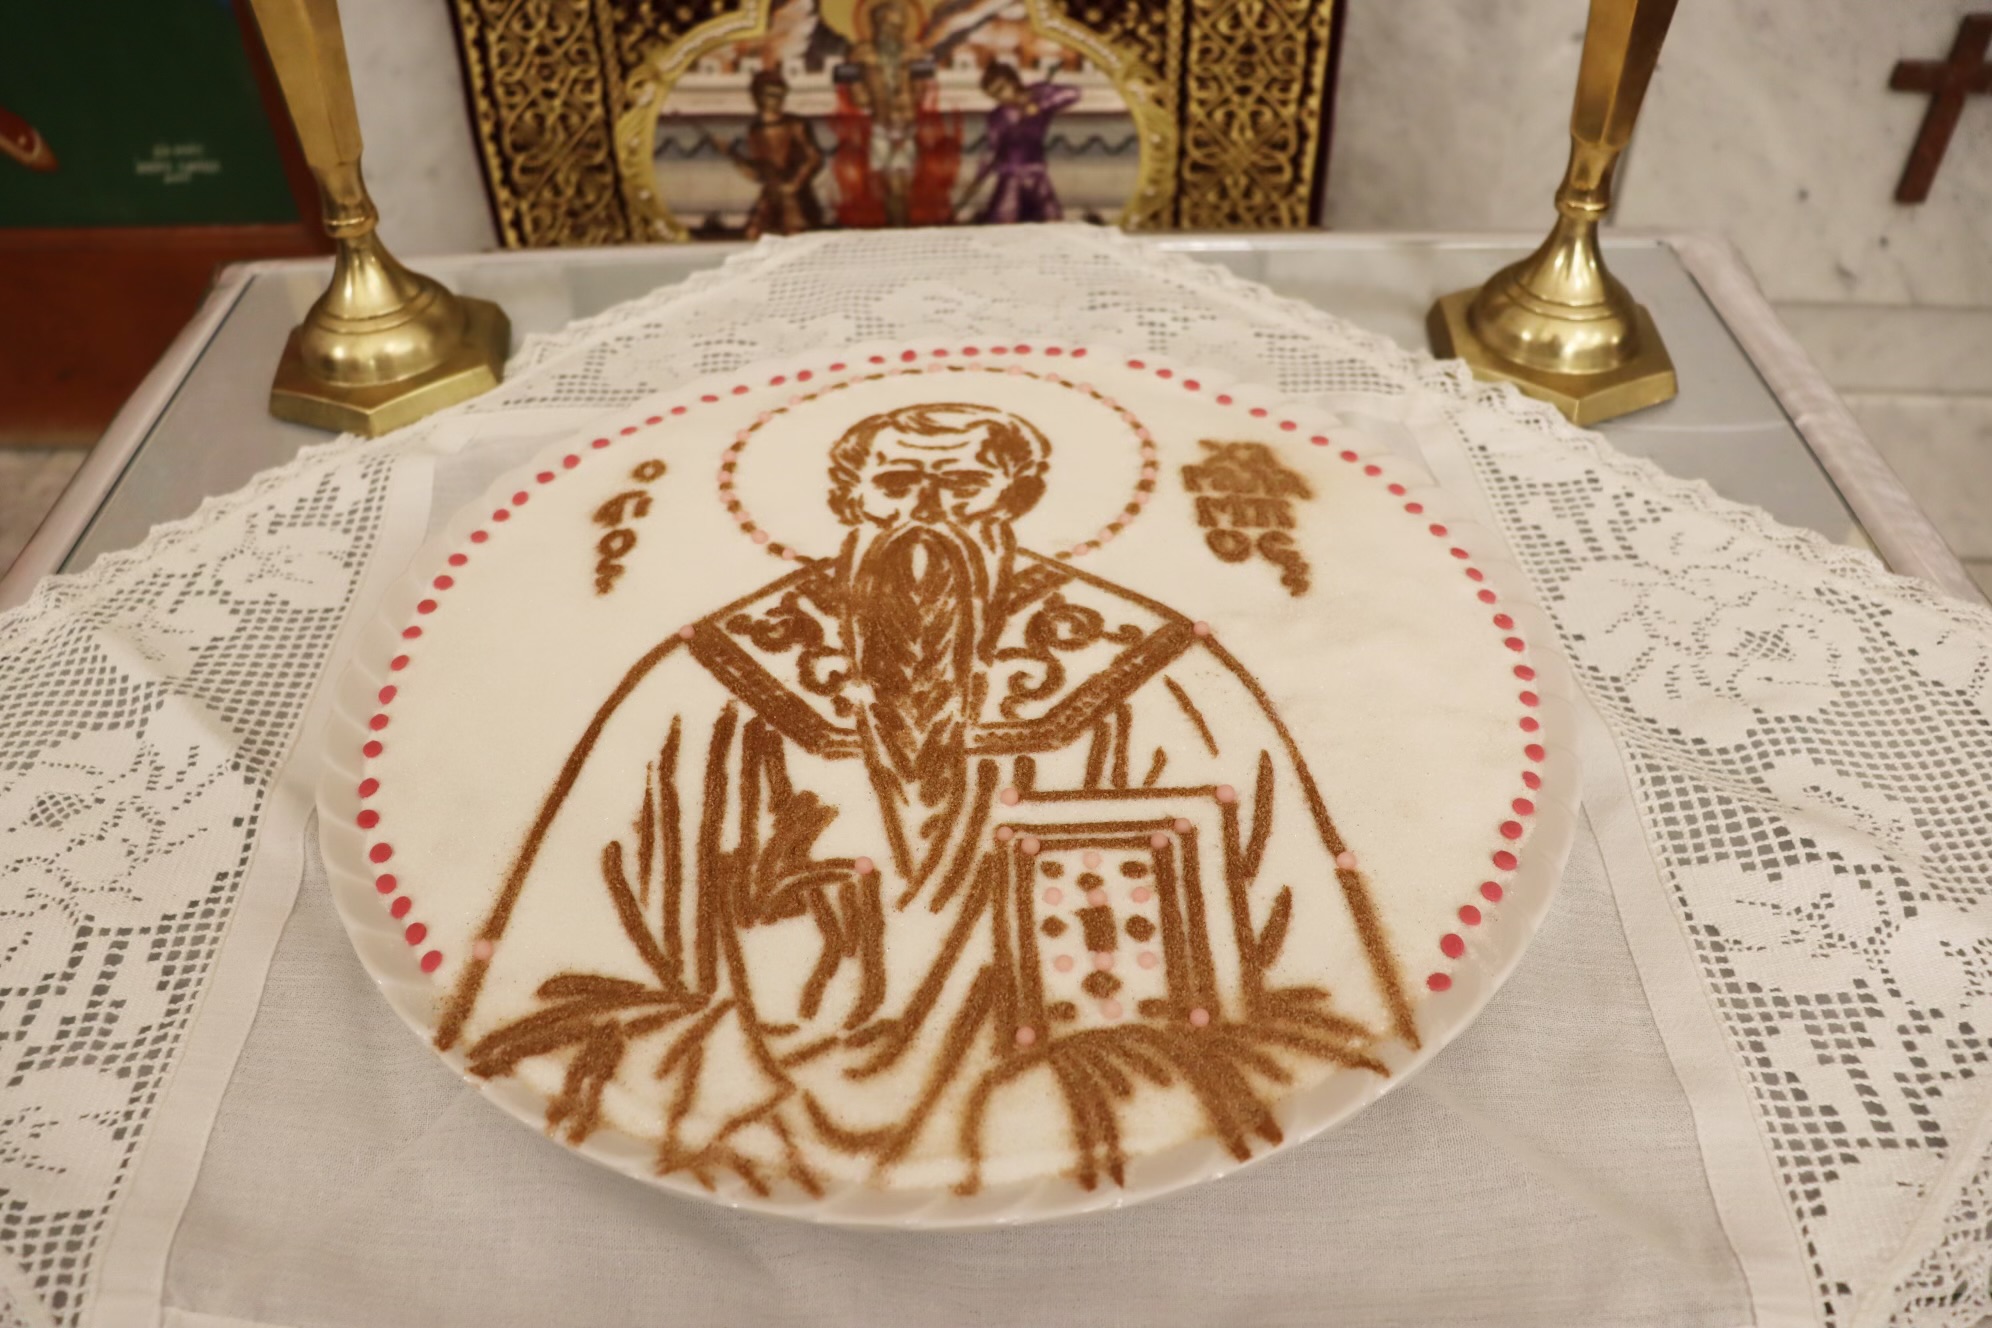 Melbourne: Bishop Kyriakos of Sozopolis liturgised at the celebrating Church of Saint Haralambos, Templestowe